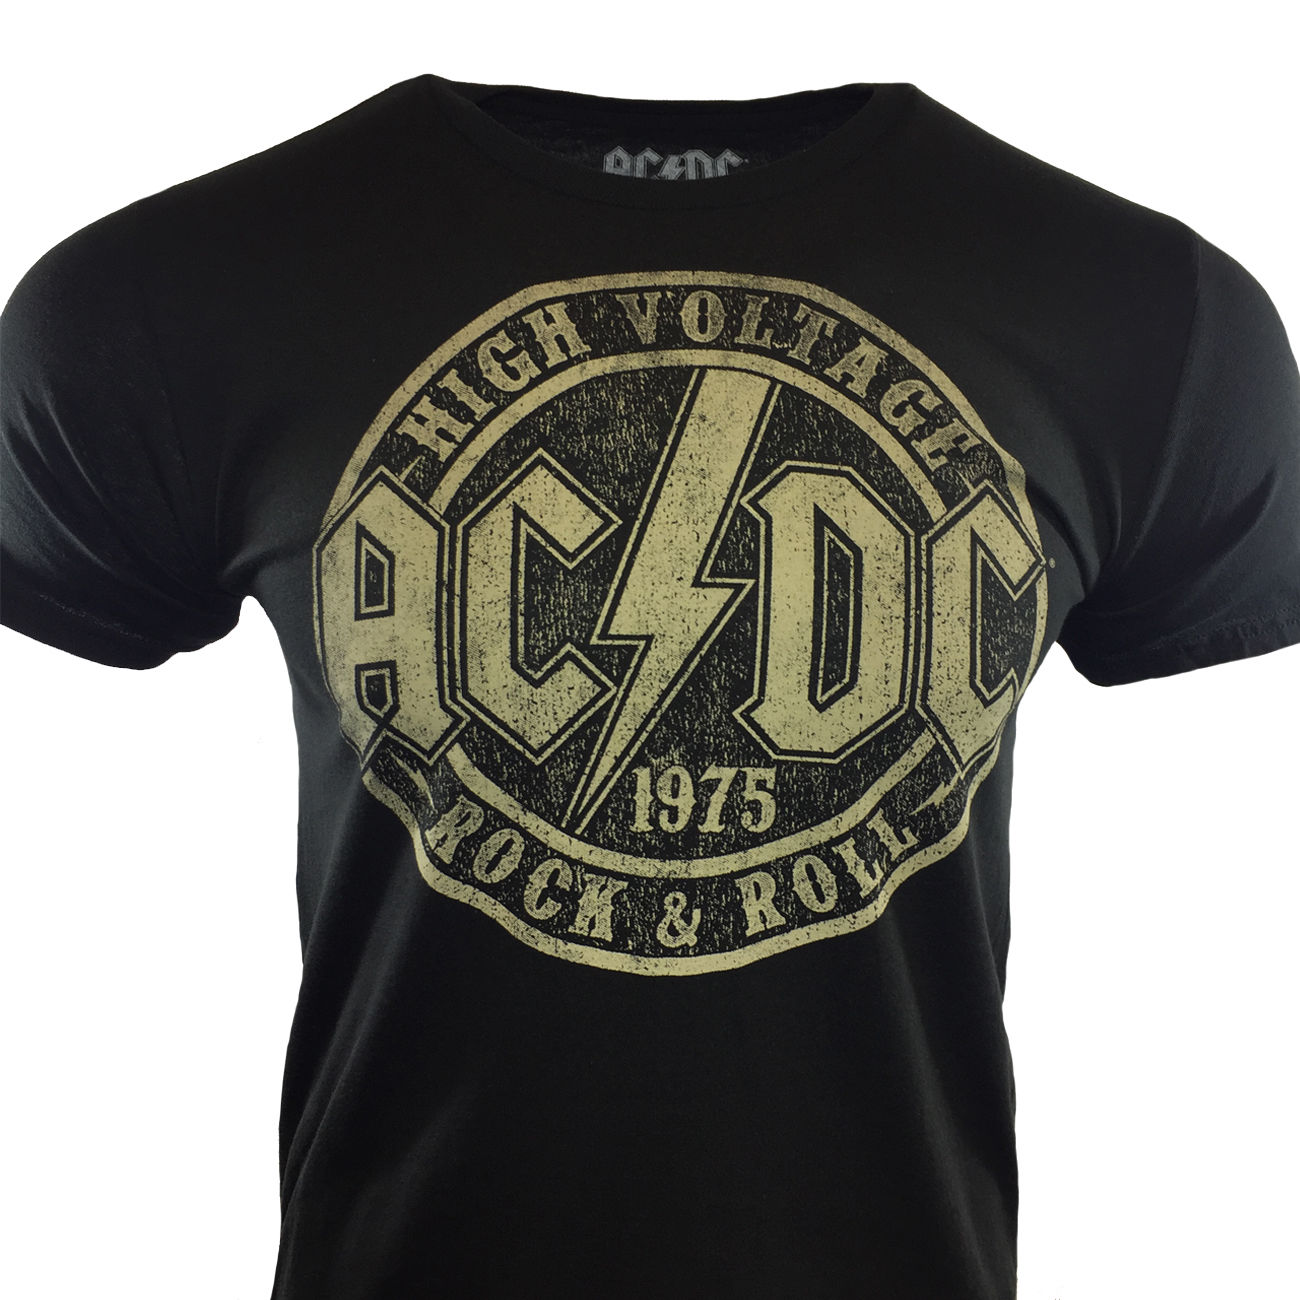 AC/DC High Voltage Rock & Roll 1975 Men's Graphic T-Shirt, Black